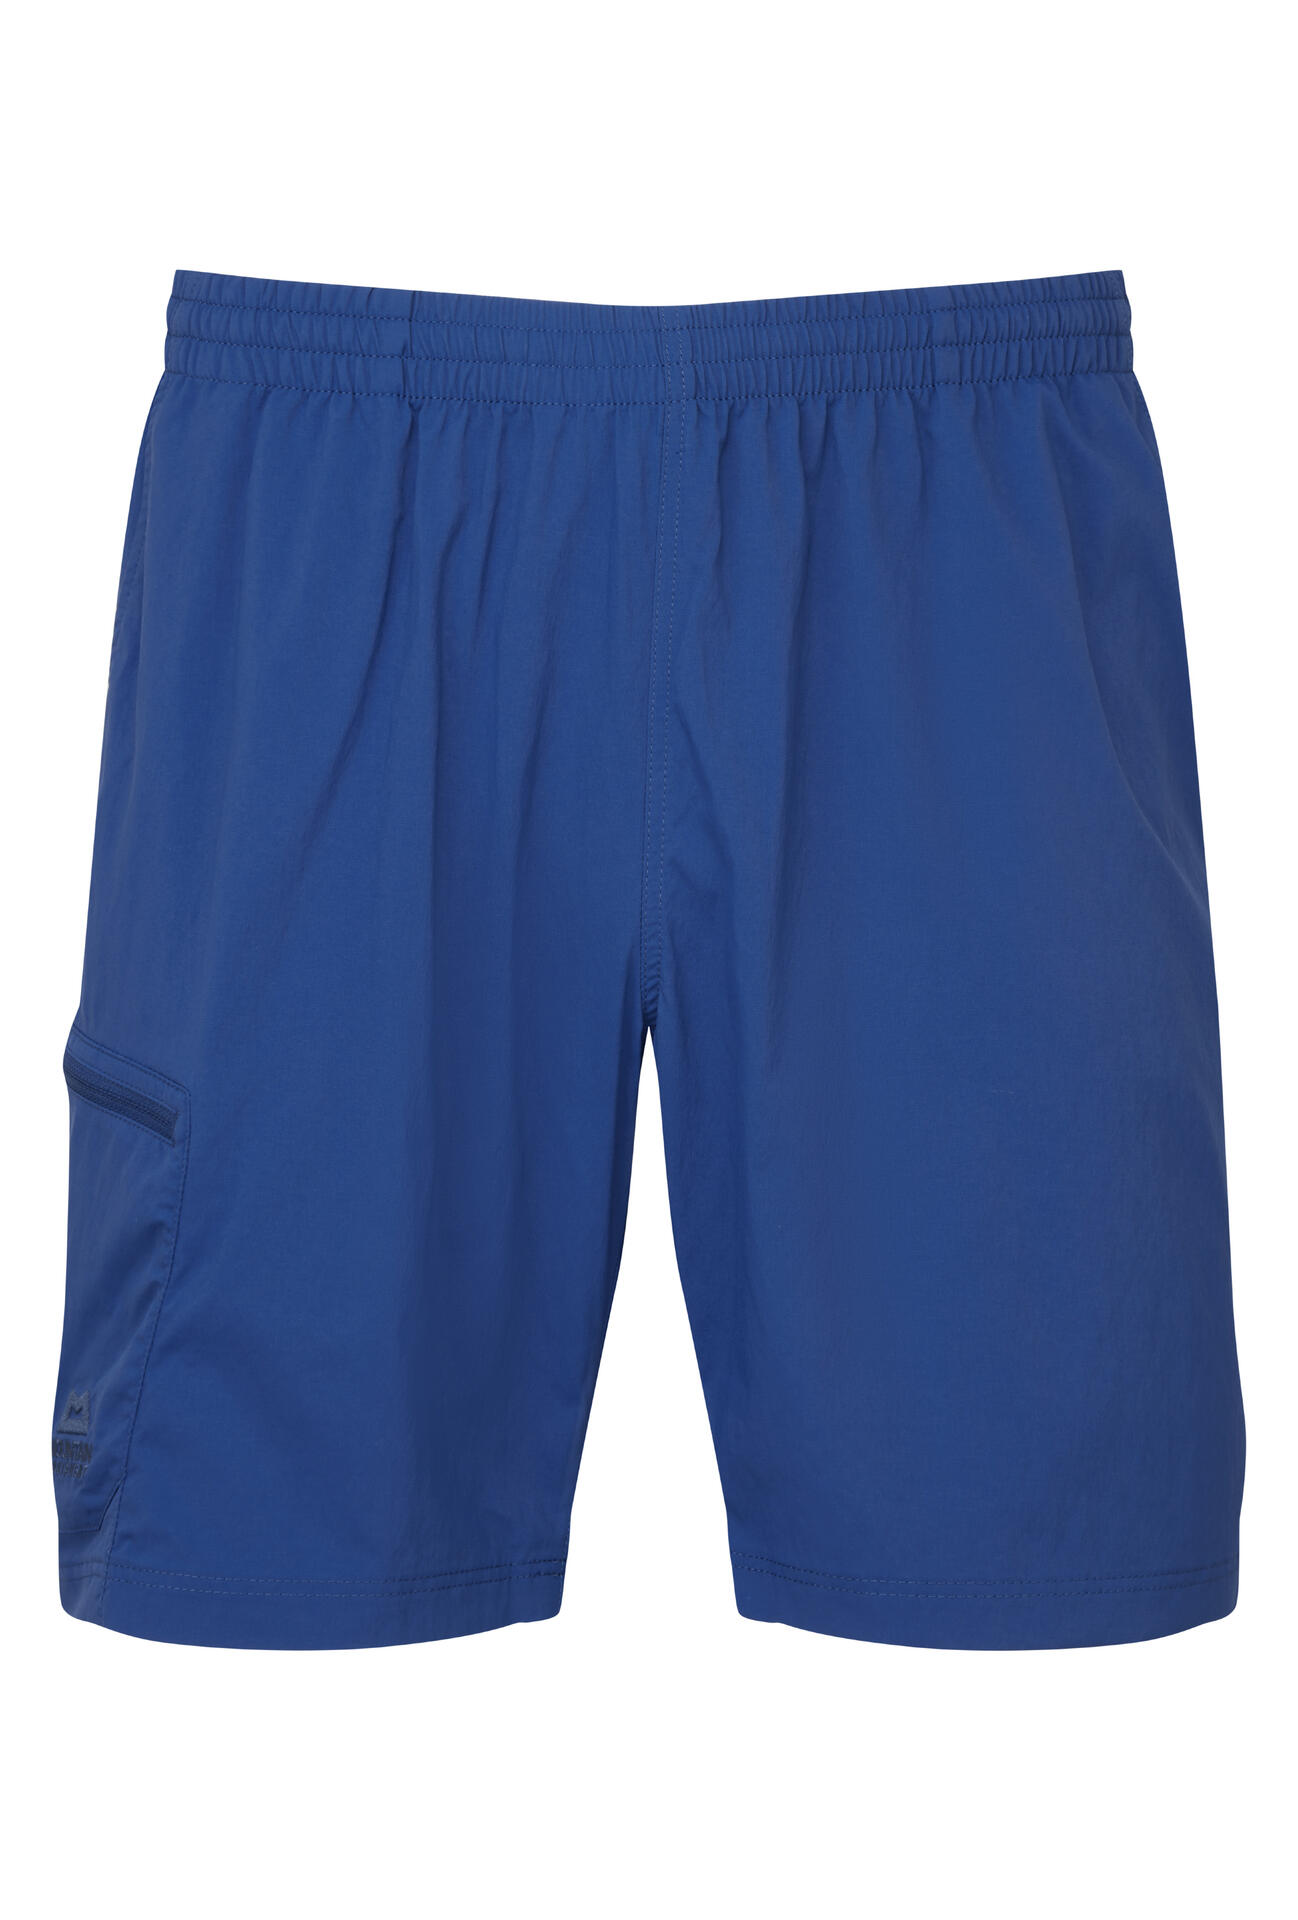 Mountain Equipment Dynamo Short Men'S Barva: admiral blue, Velikost: L